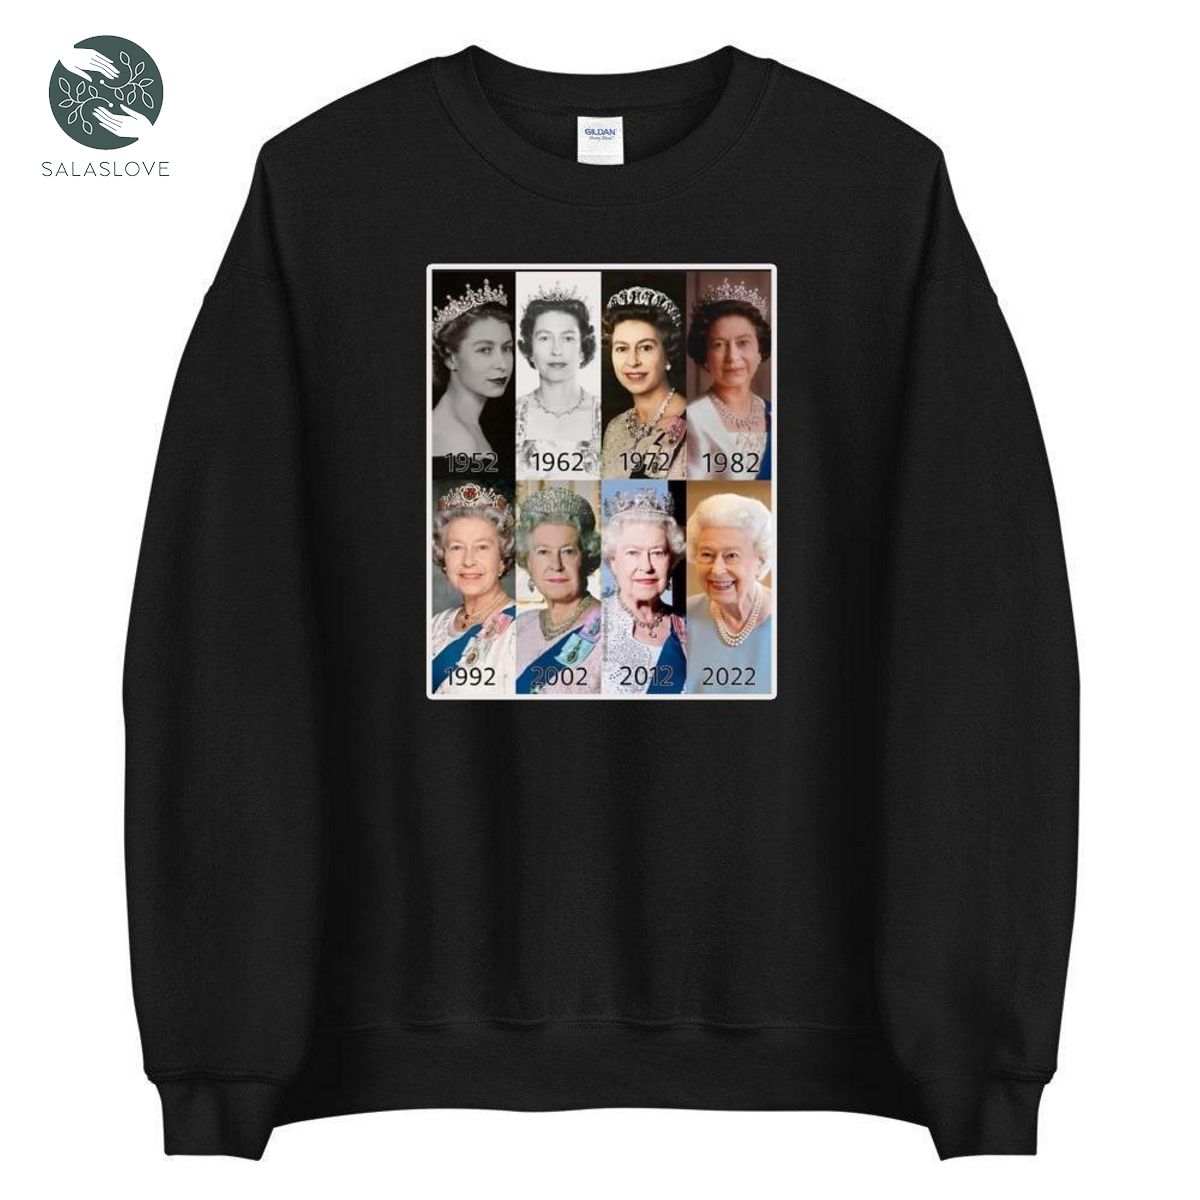 The Queen Elizabeth Royals Family T-shirt